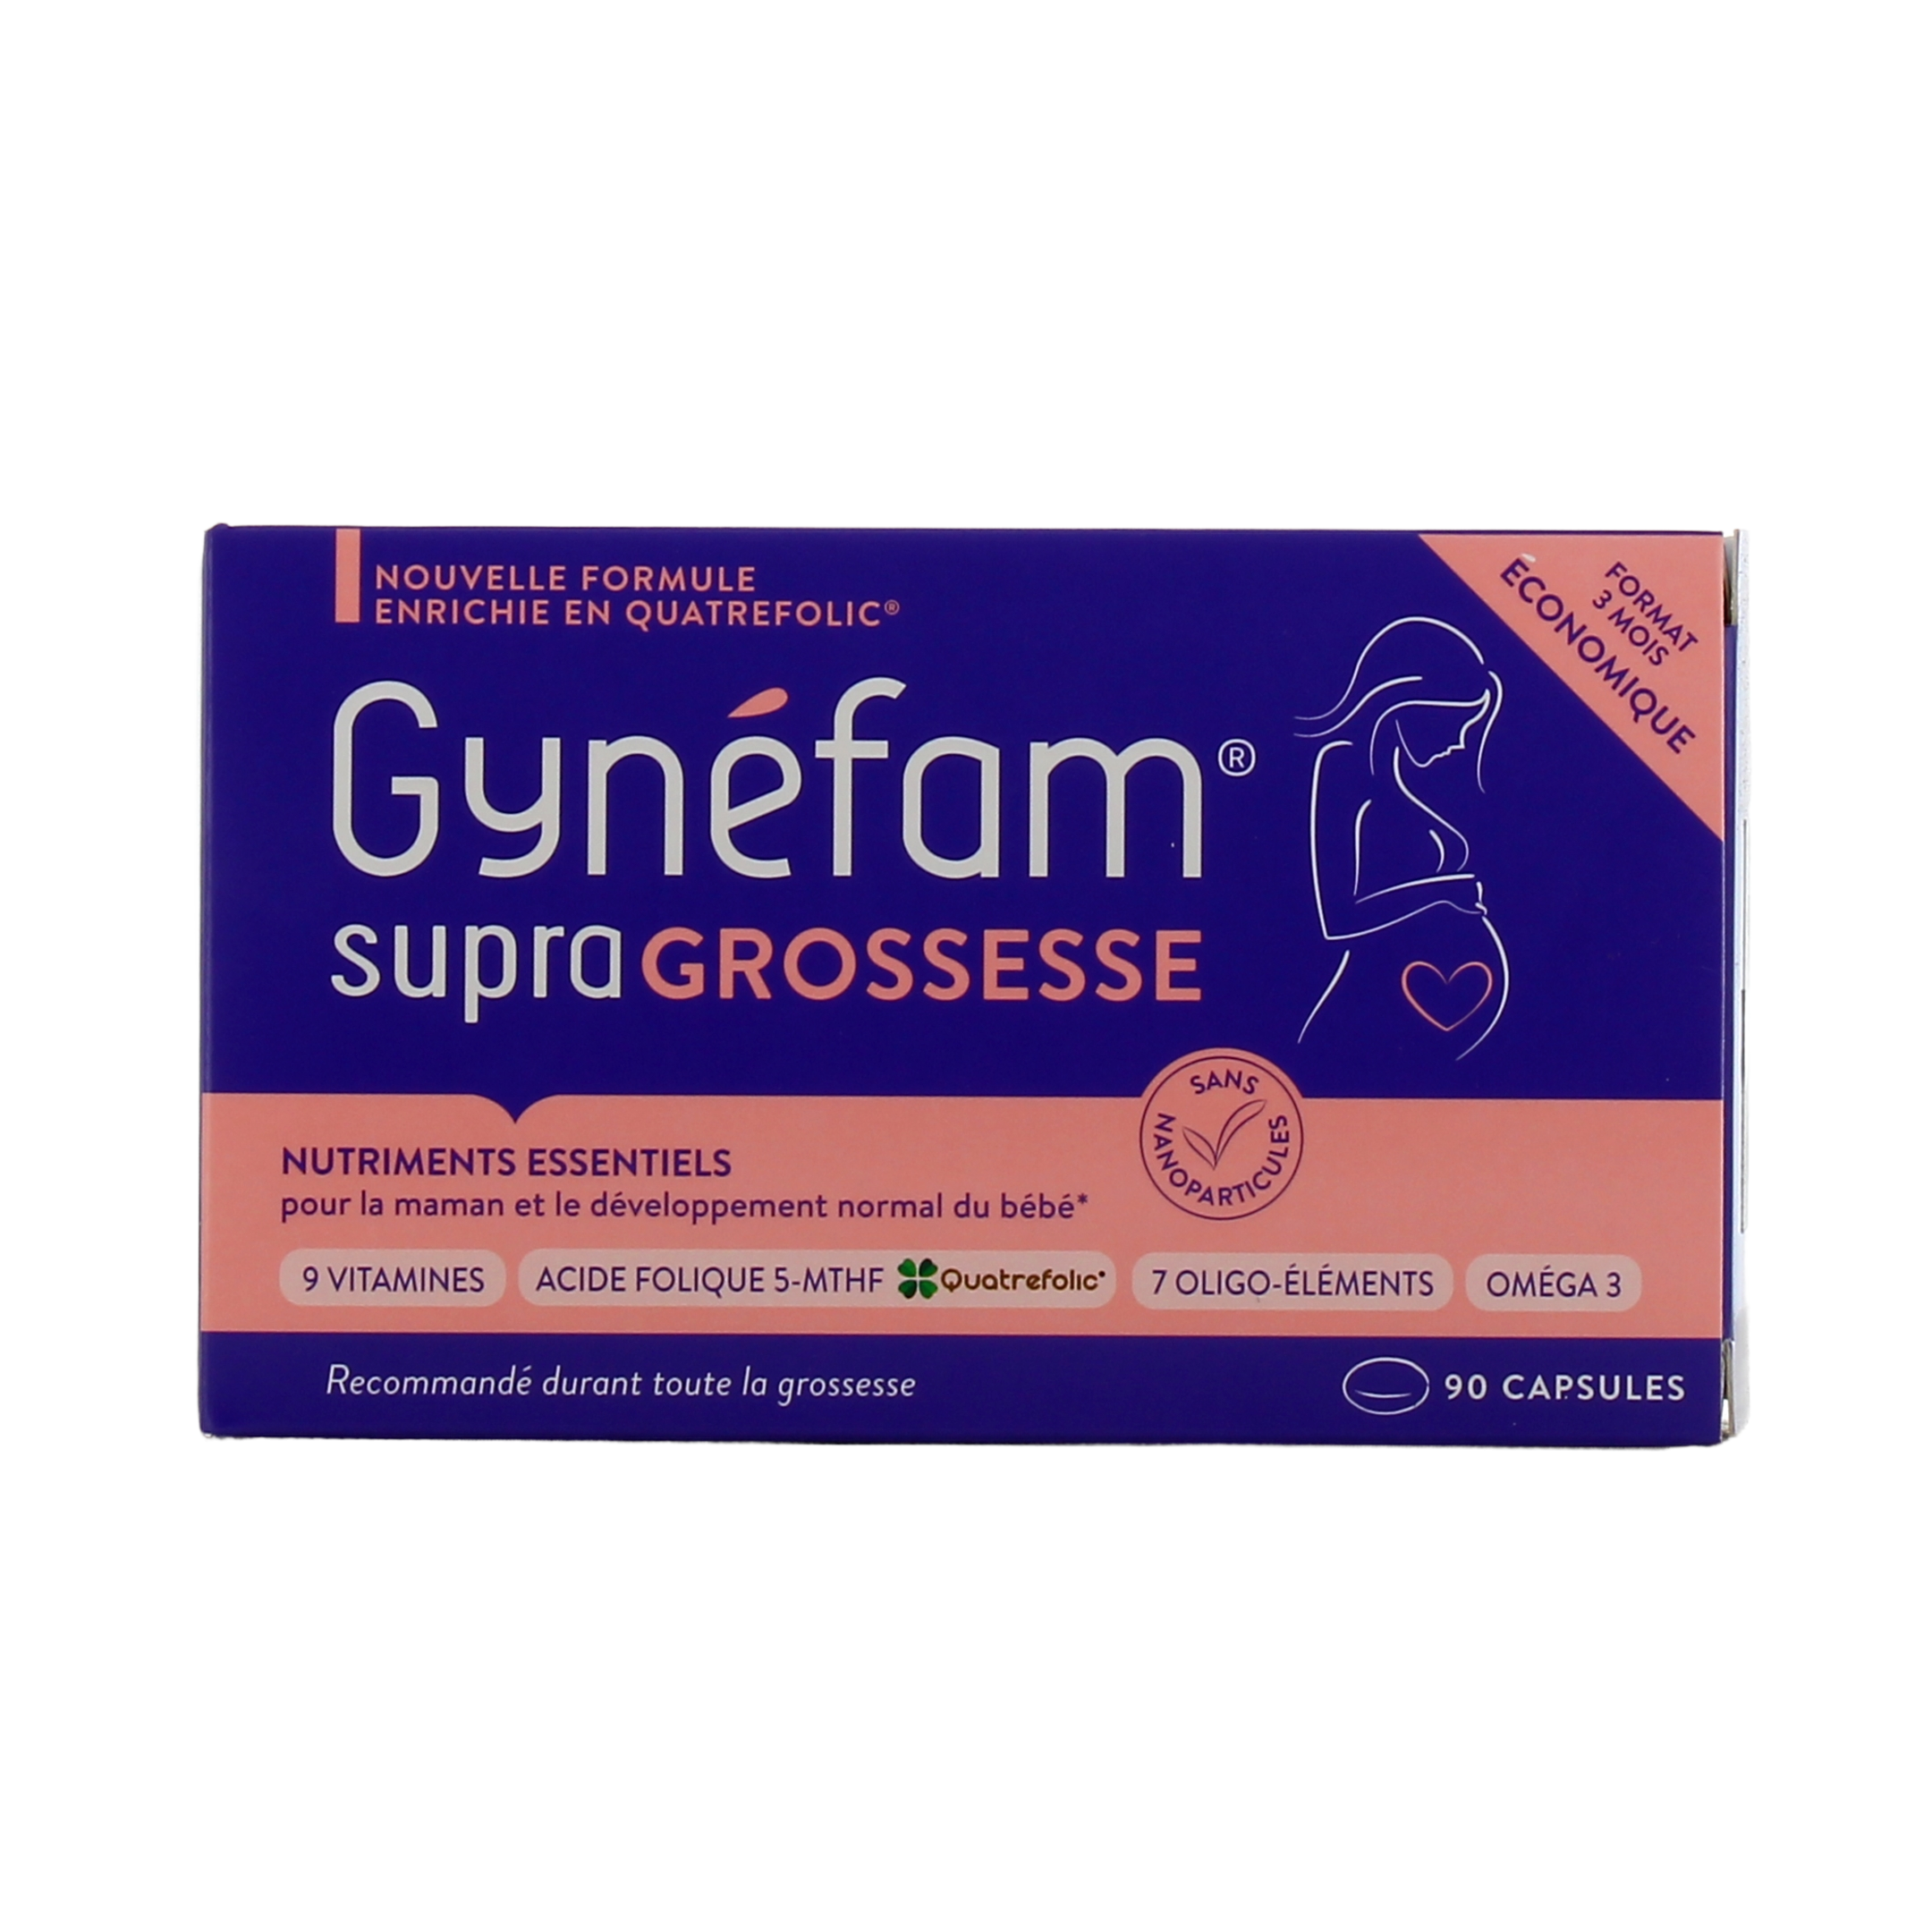 GYNEFAM SUPRA CAPS /30 - Pharmacie Cap3000